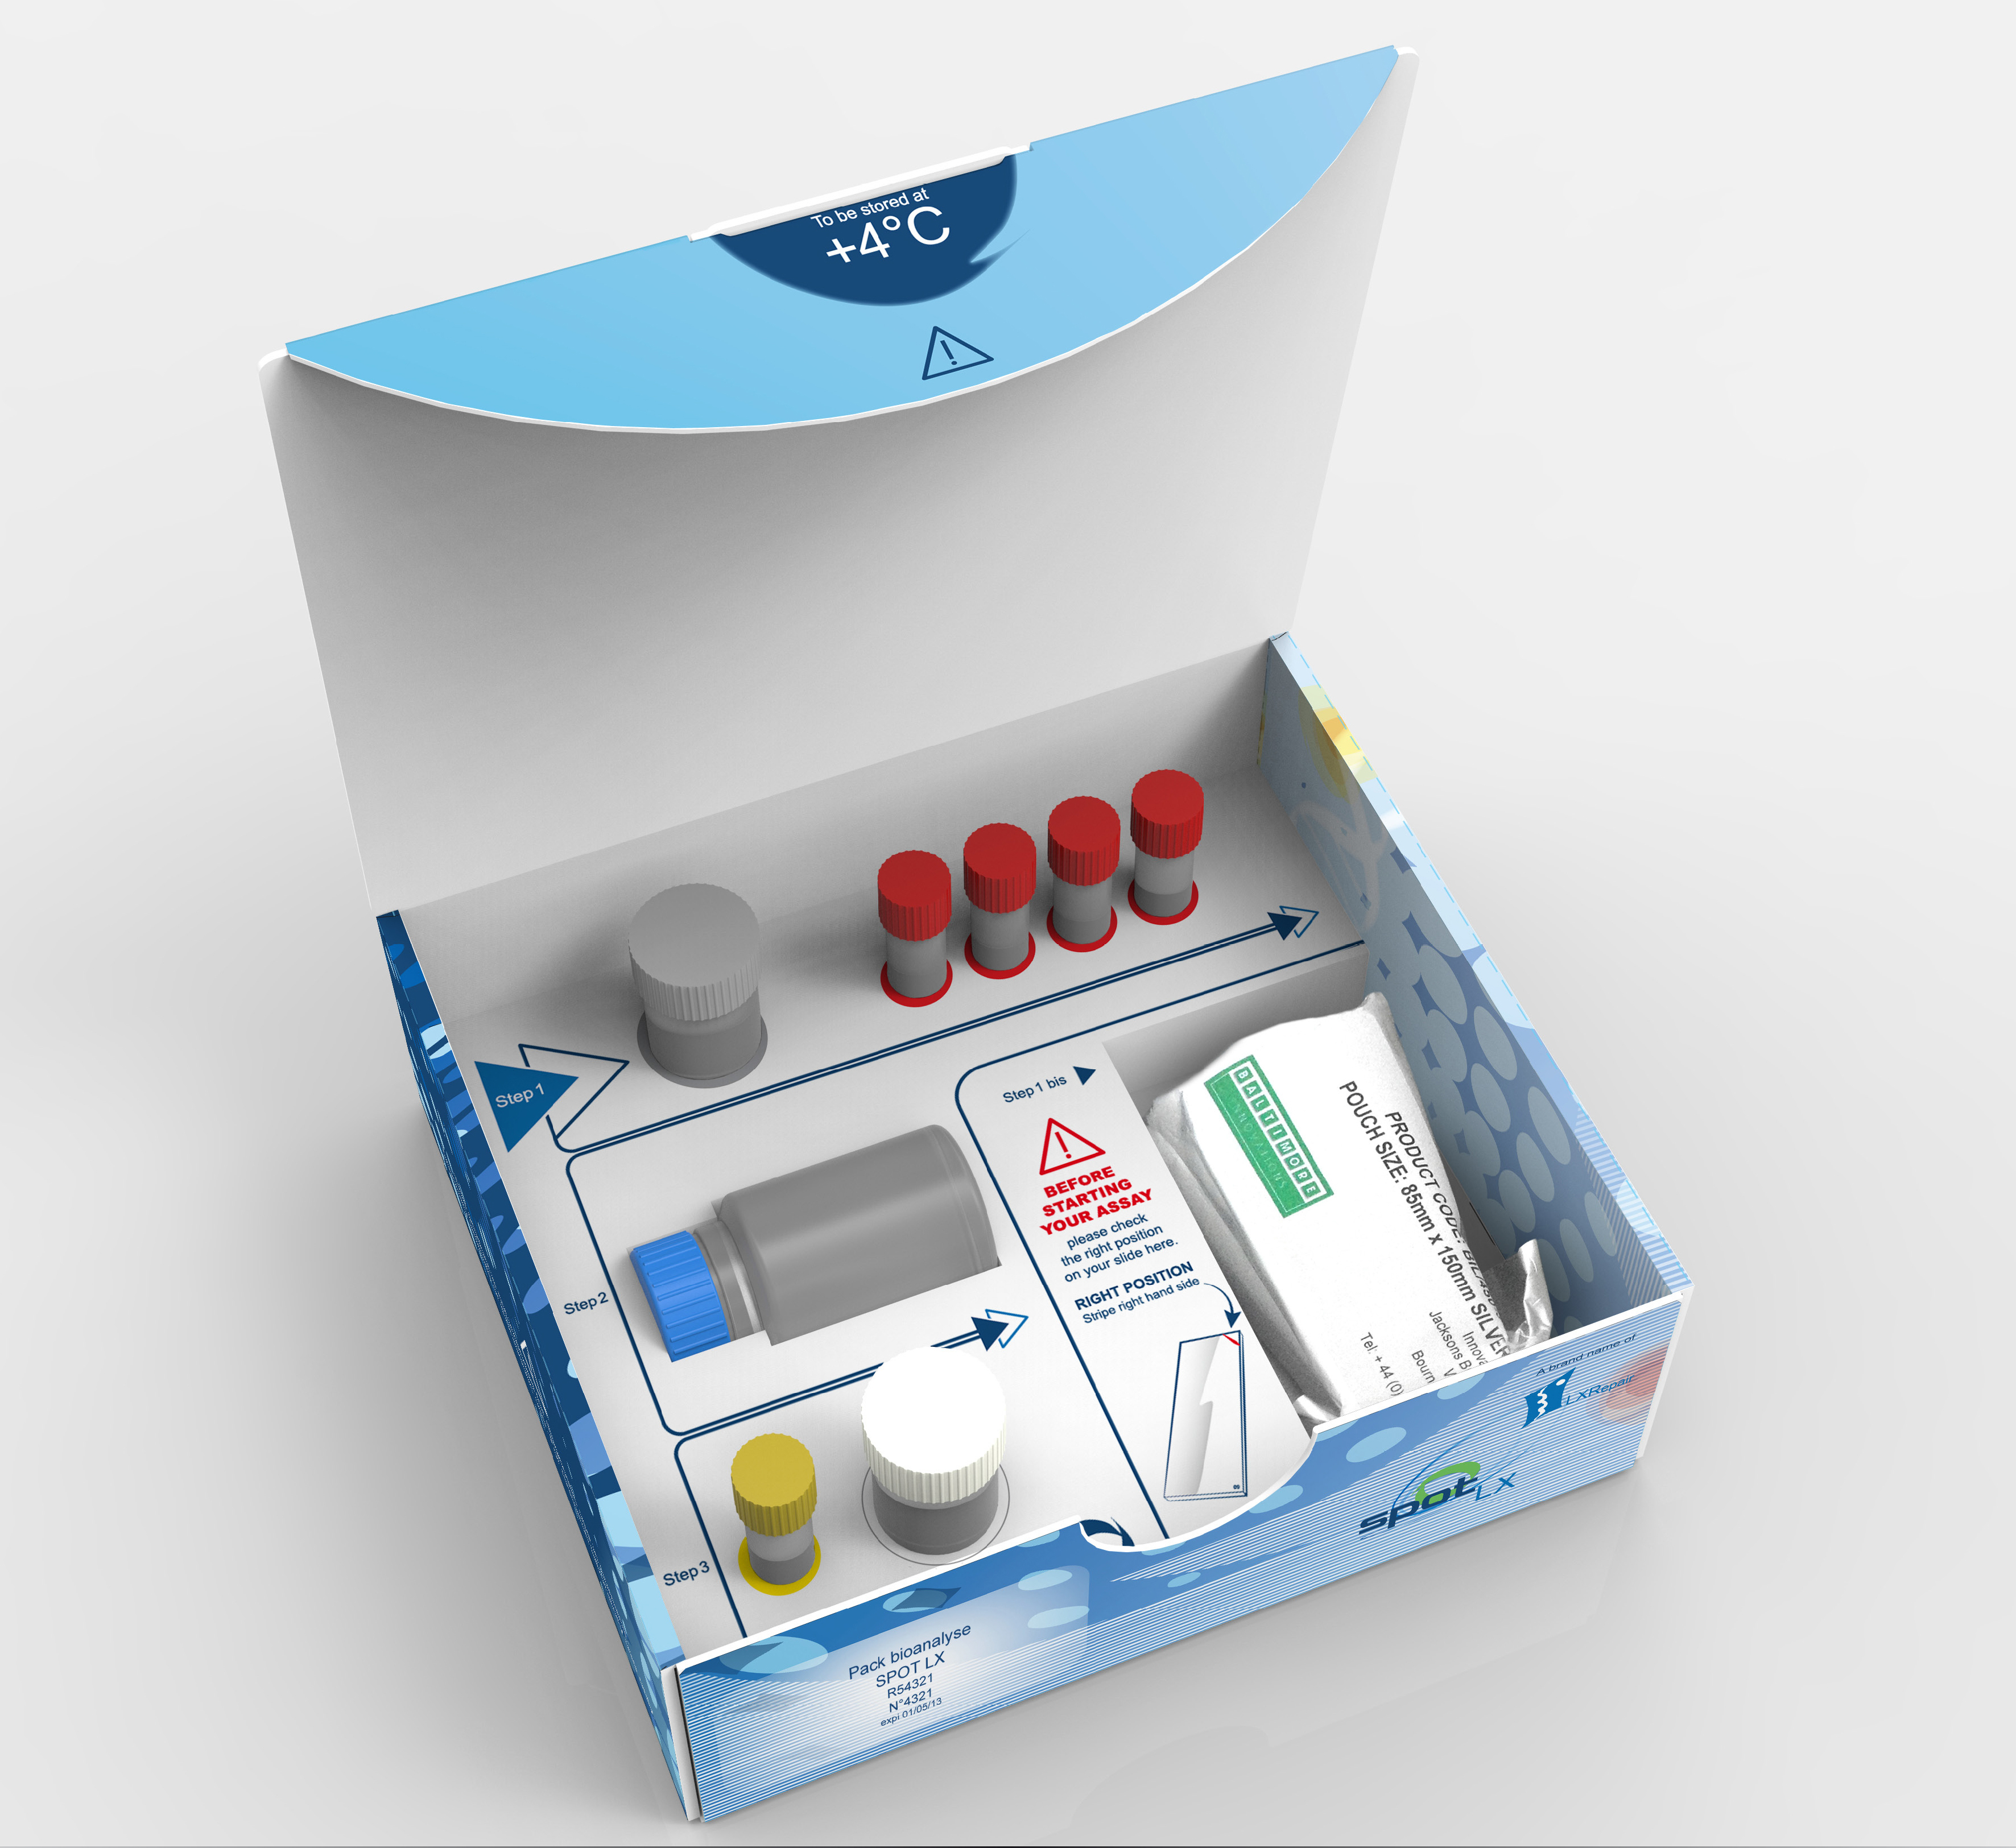 Glyco-SPOT DNA Repair Assay Kit